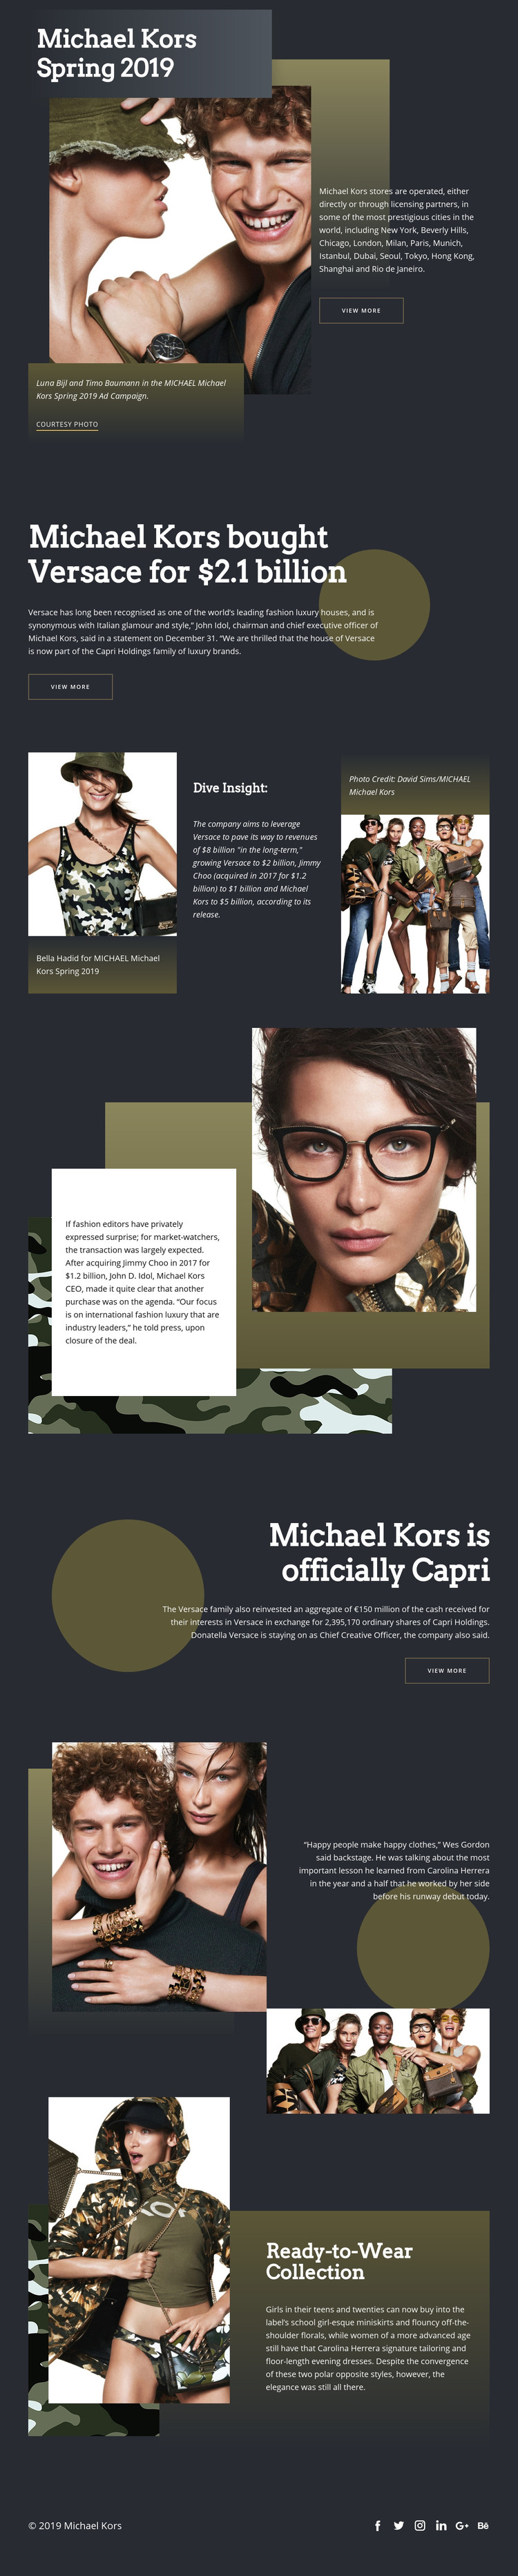 Michael Kors Dark Homepage Design